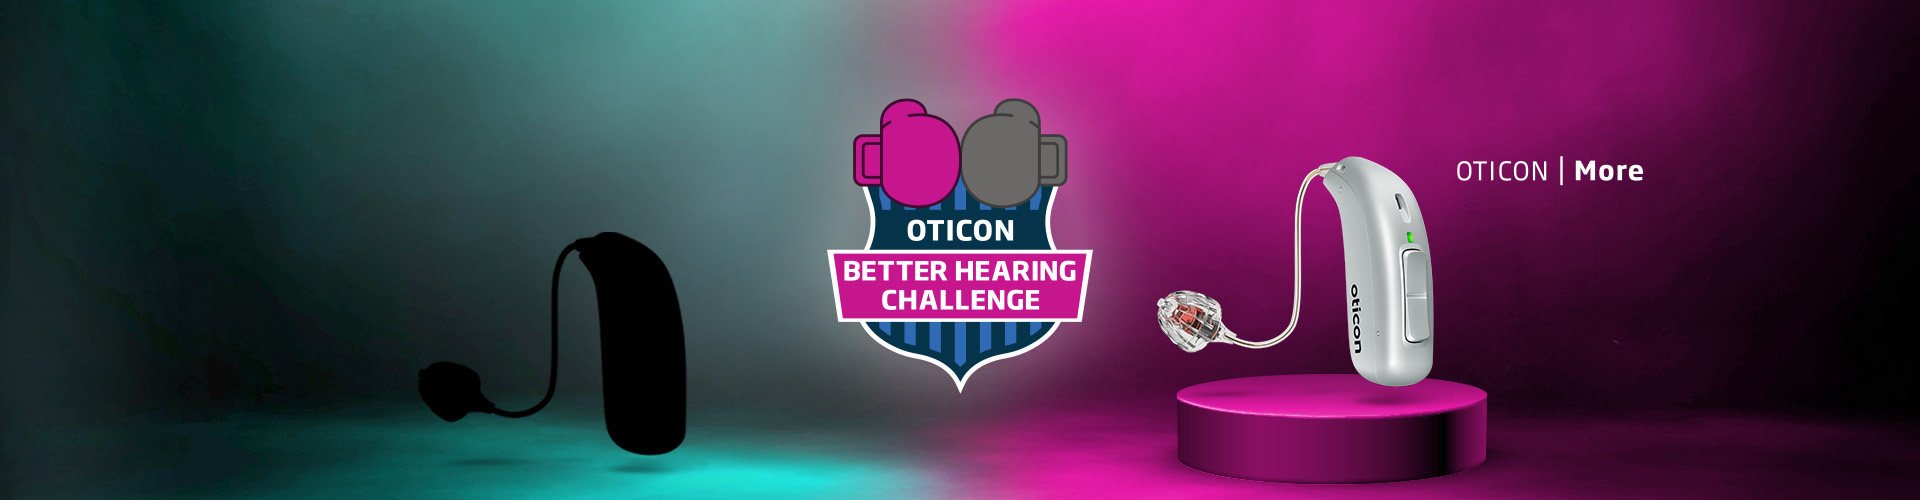 Oticon Better Hearing Challenge Rebate